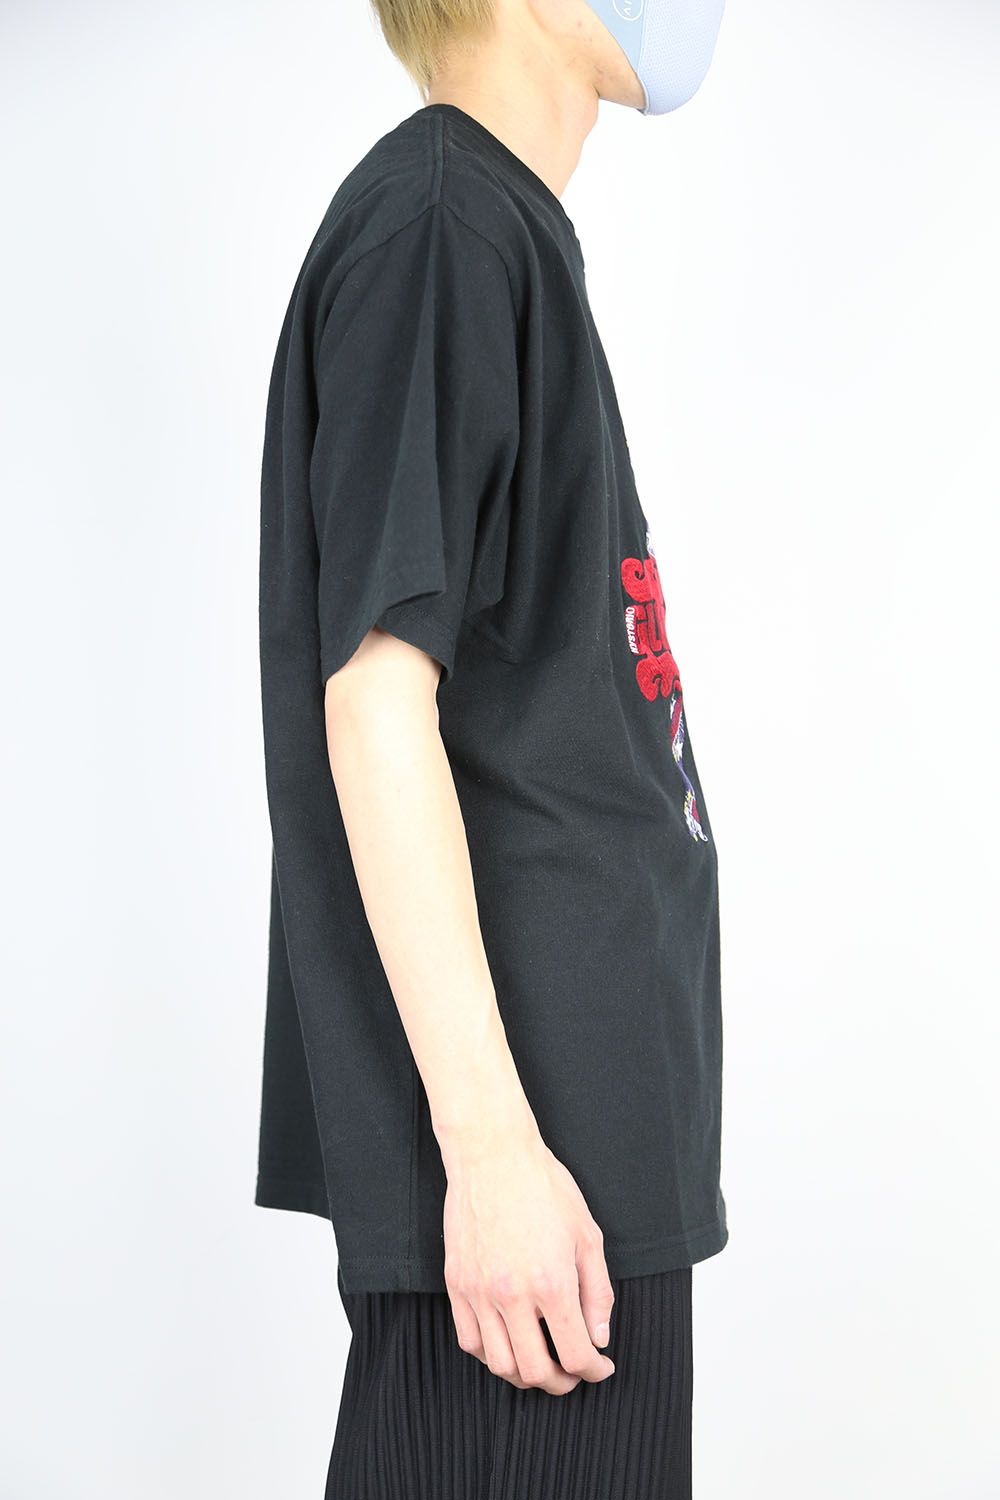 HYSTERIC GLAMOUR - VIXEN GIRL刺繍 Tシャツ / ブラック | Tempt